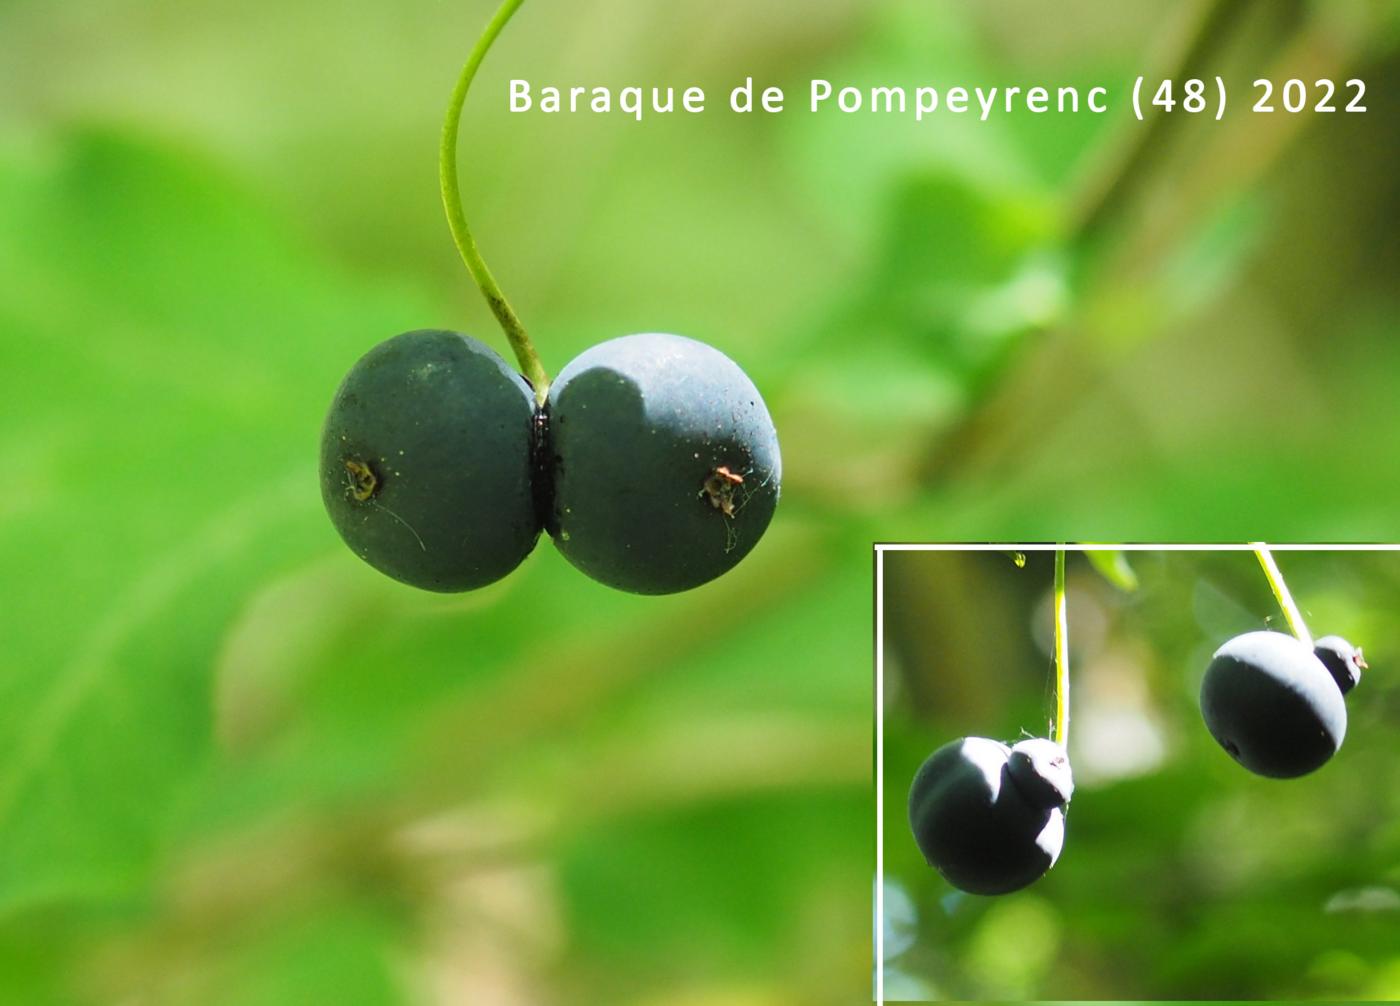 Honeysuckle, Black-berried fruit